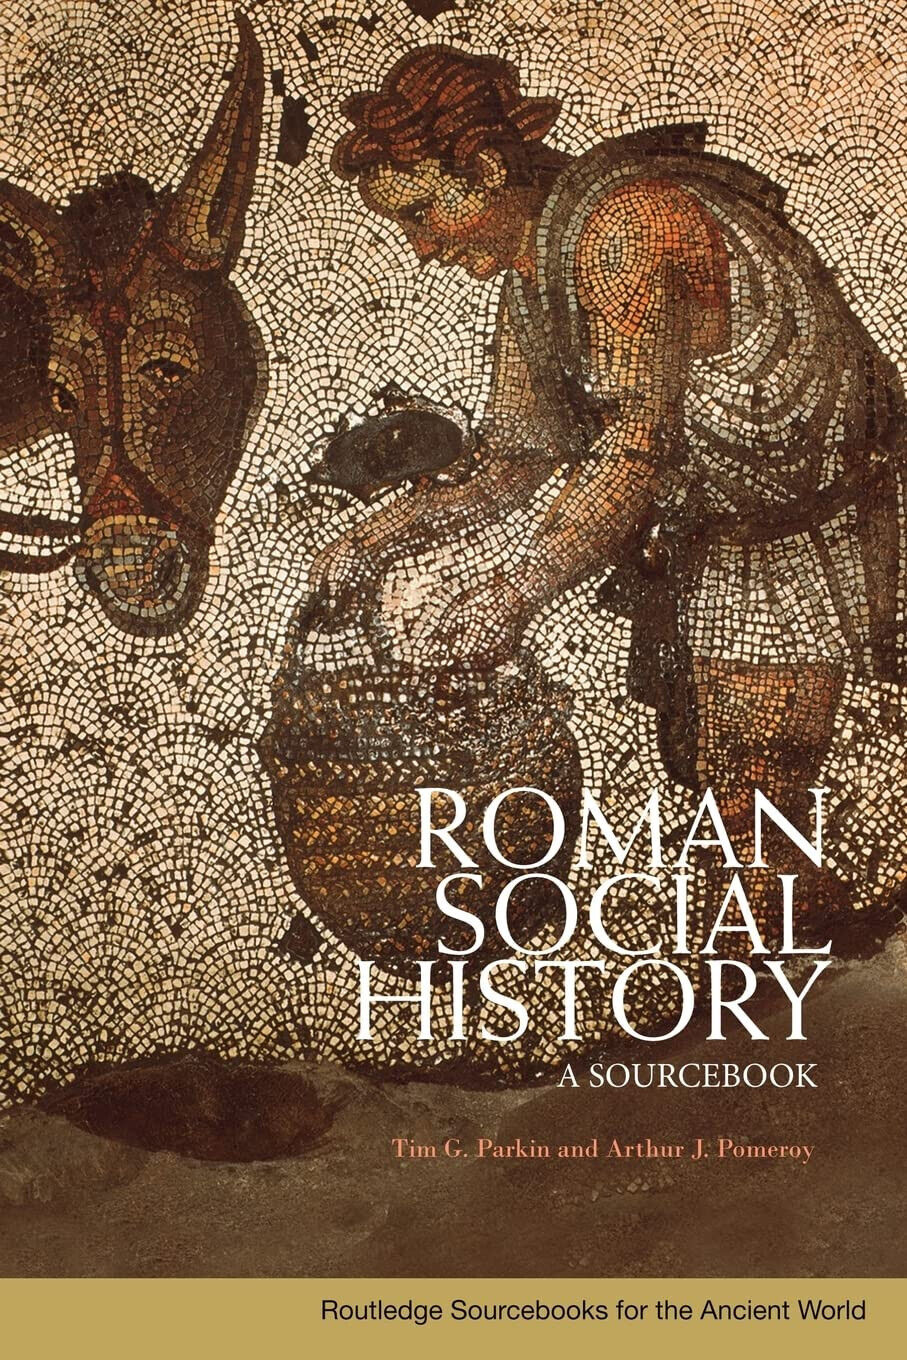 Roman Social History - Tim G. Parkin, Arthur J. Pomeroy - Routledge, 2007